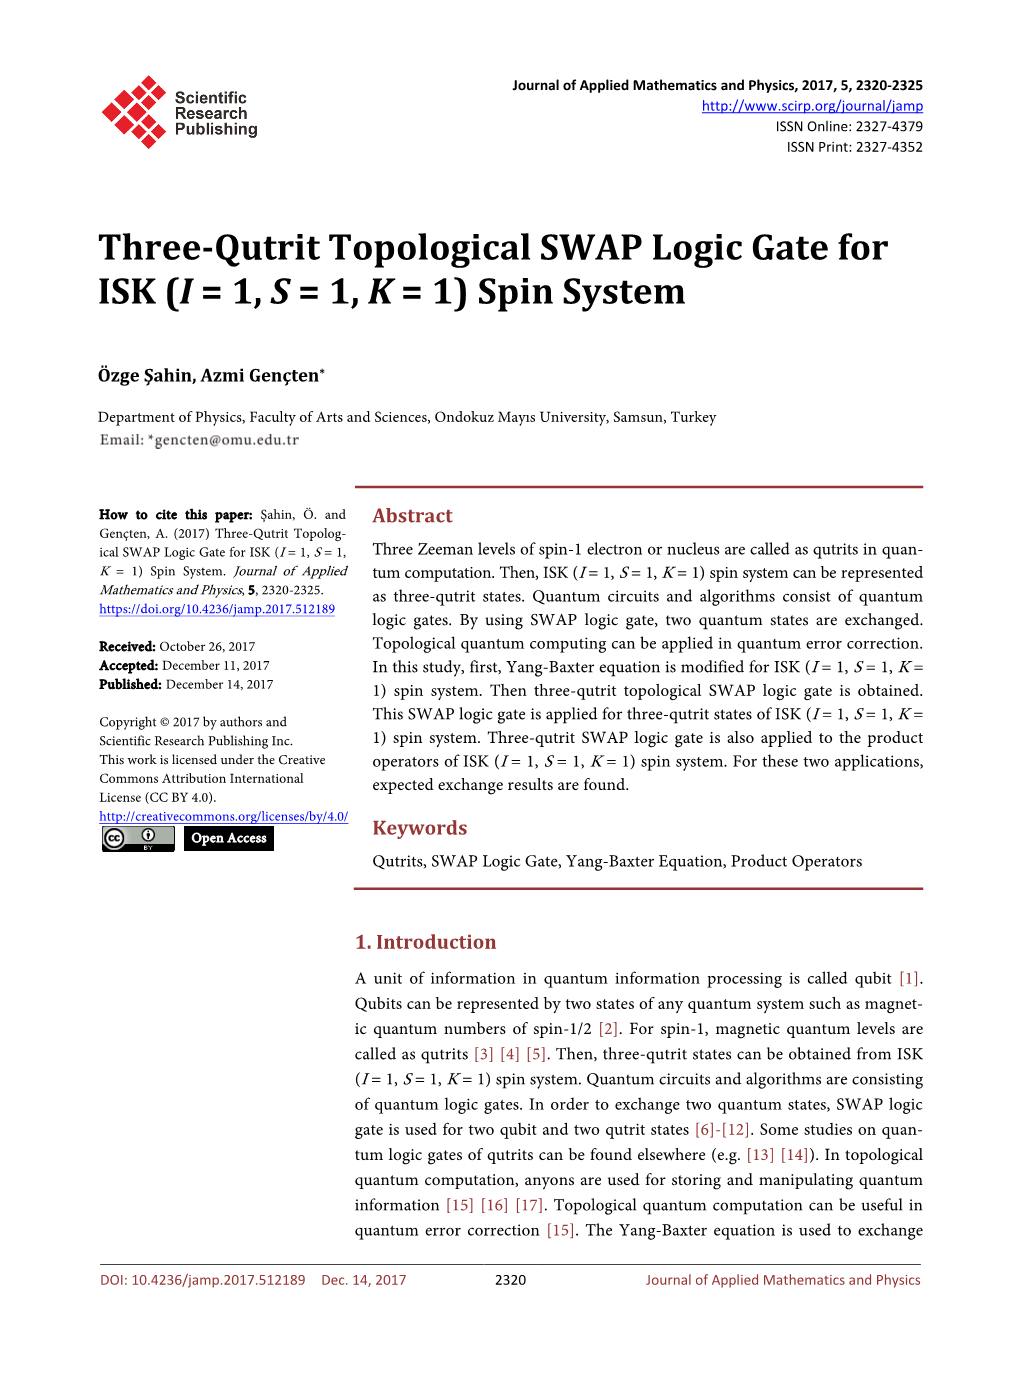 Three-Qutrit Topological SWAP Logic Gate for ISK (I = 1, S = 1, K = 1) Spin System